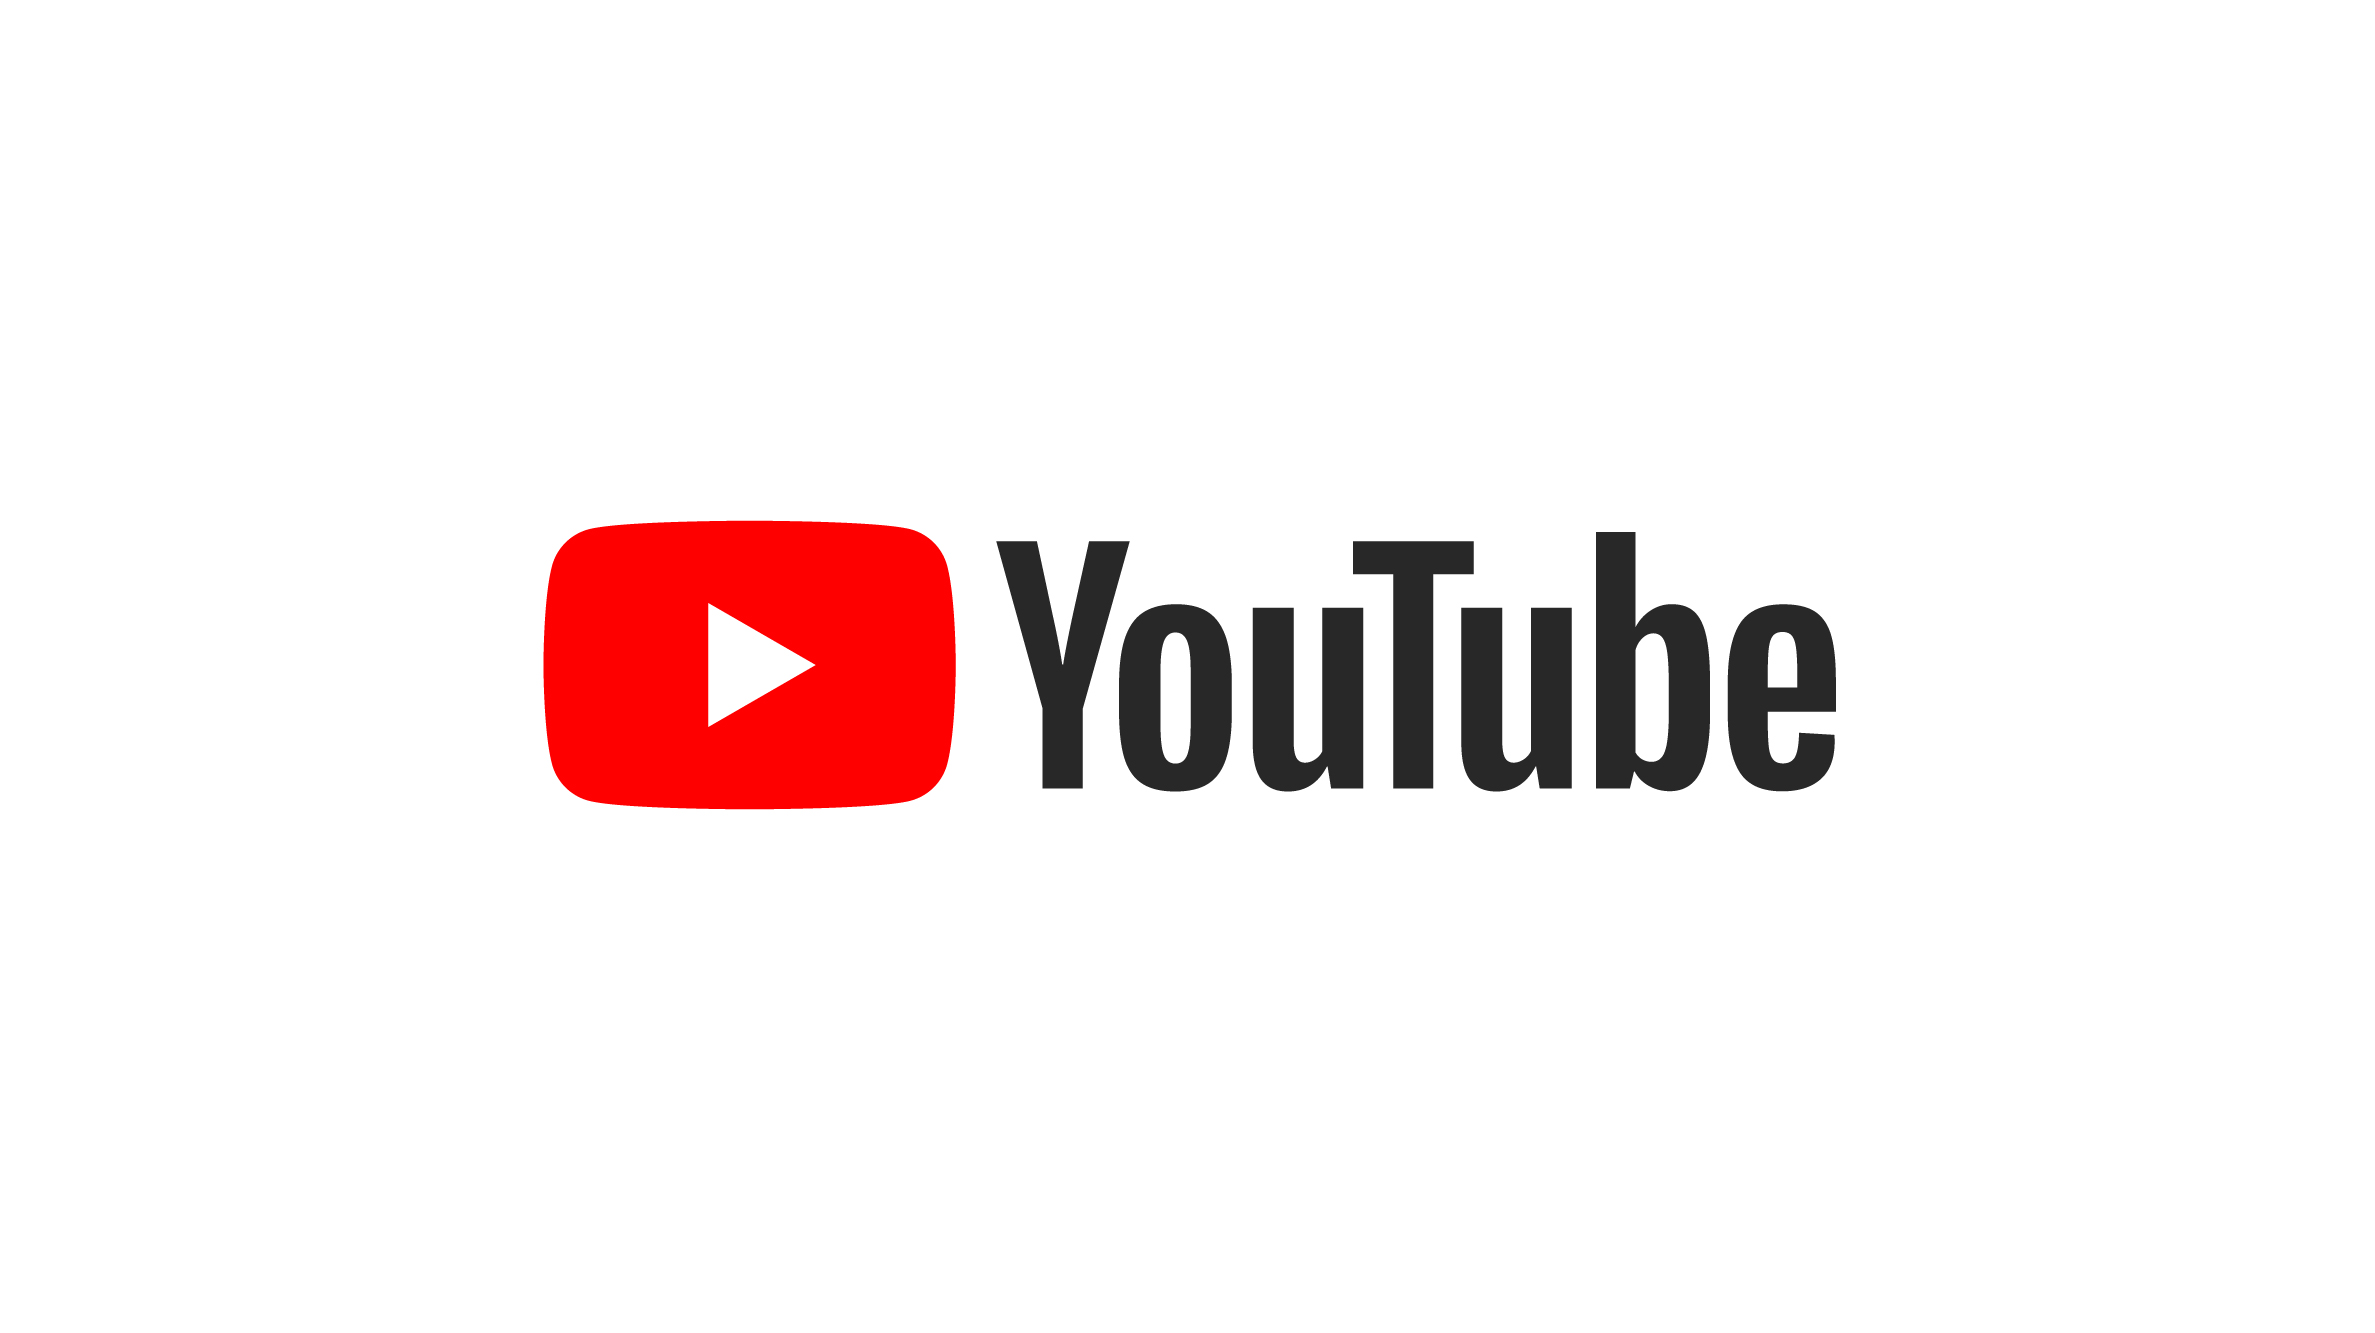 YouTube video sharing platform